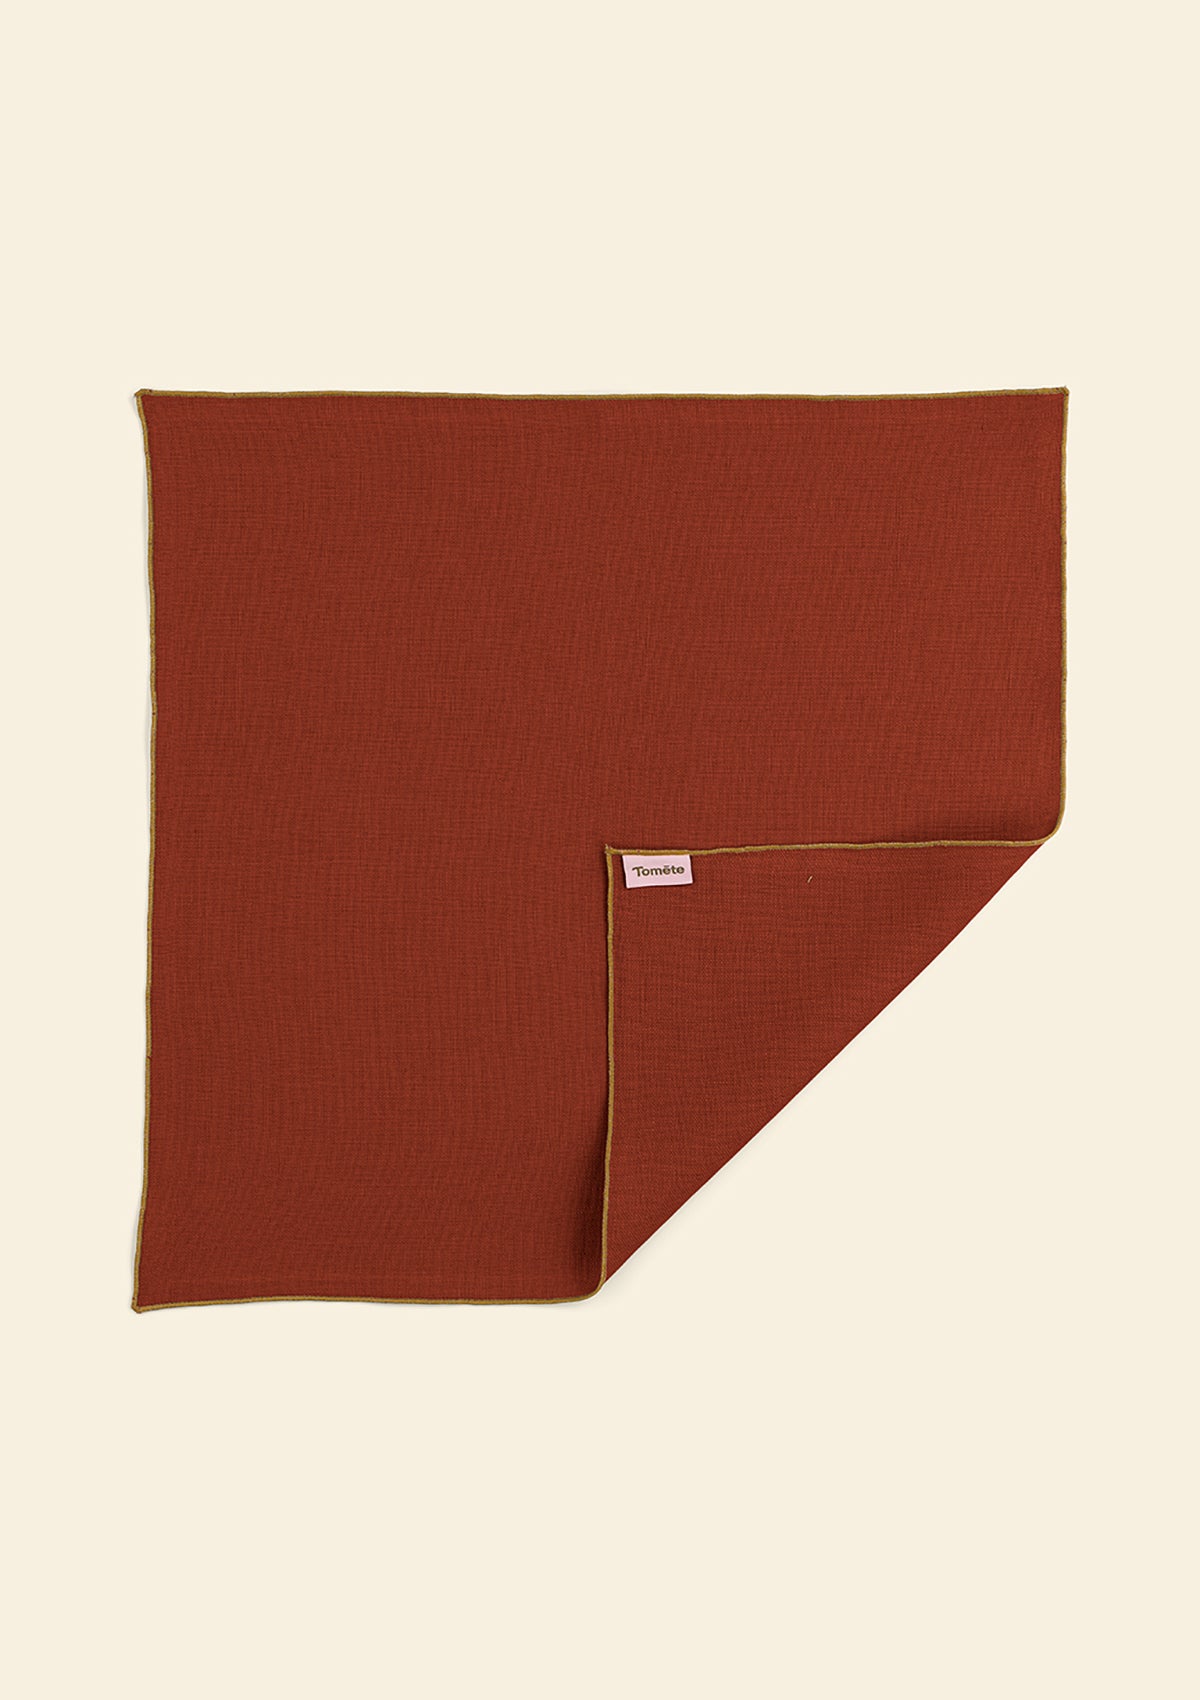 The Terracotta linen napkin